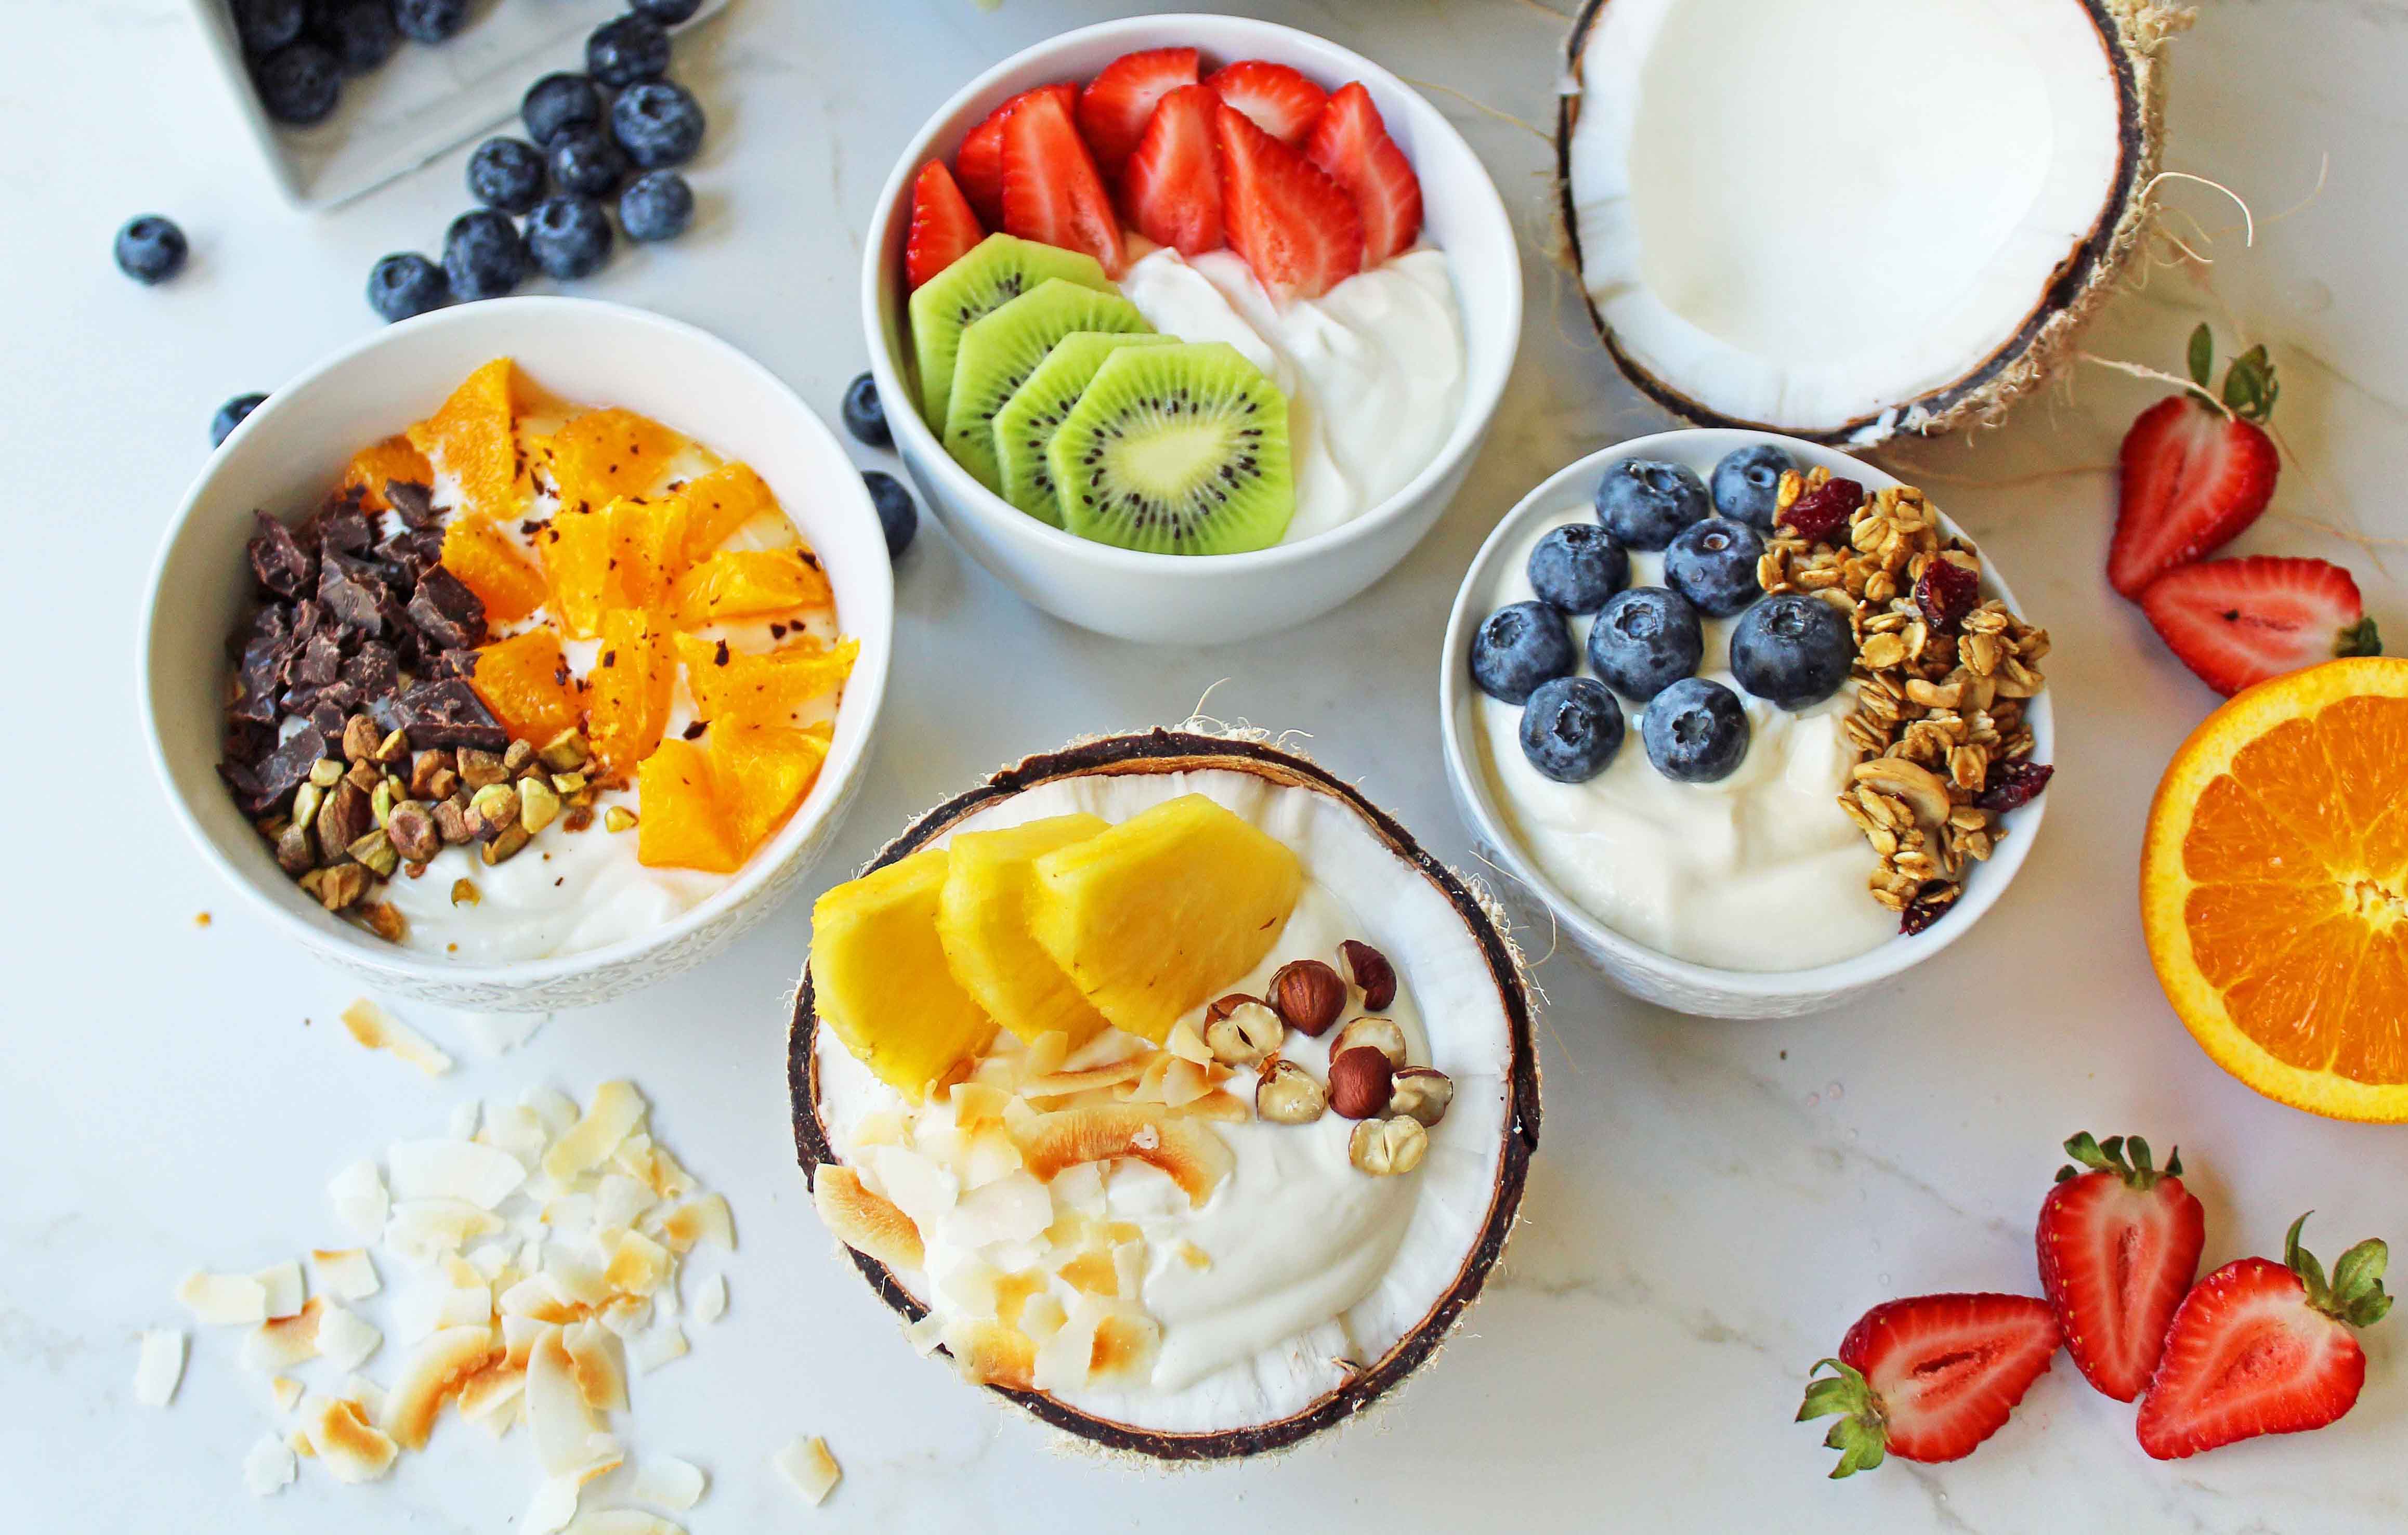 Yogurt Bowl (Tasty Breakfast Idea!) - Our Zesty Life